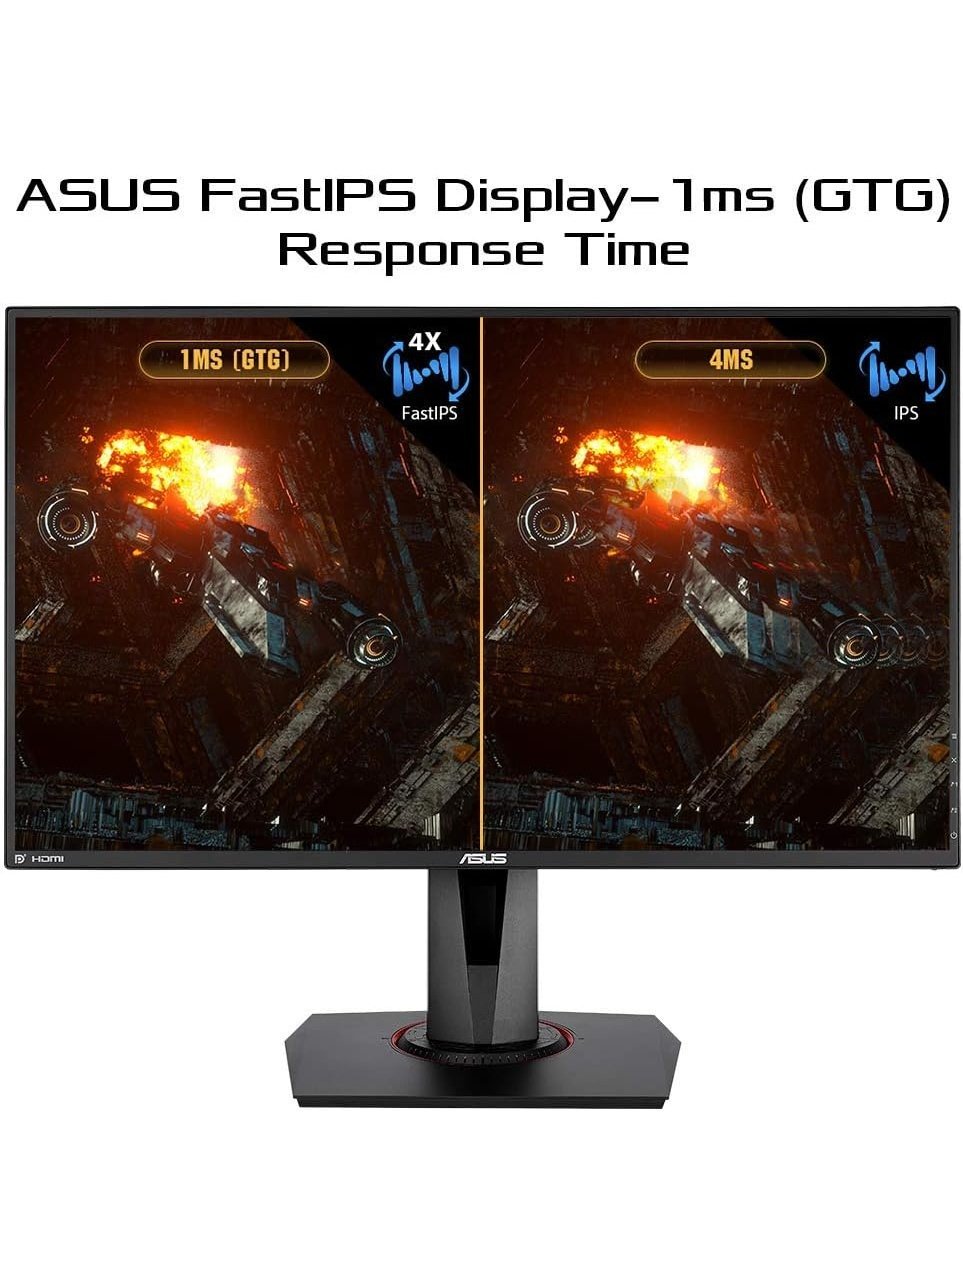 ASUS TUF Gaming VG279QM 27” HDR Monitor, 1080P Full HD 1920 x 1080 , Fast IPS, 280Hz, G-SYNC Compatible, Extreme Low Motion Blur Sync ELMB SYNC , 1ms, DisplayHDR 400,, BLACK